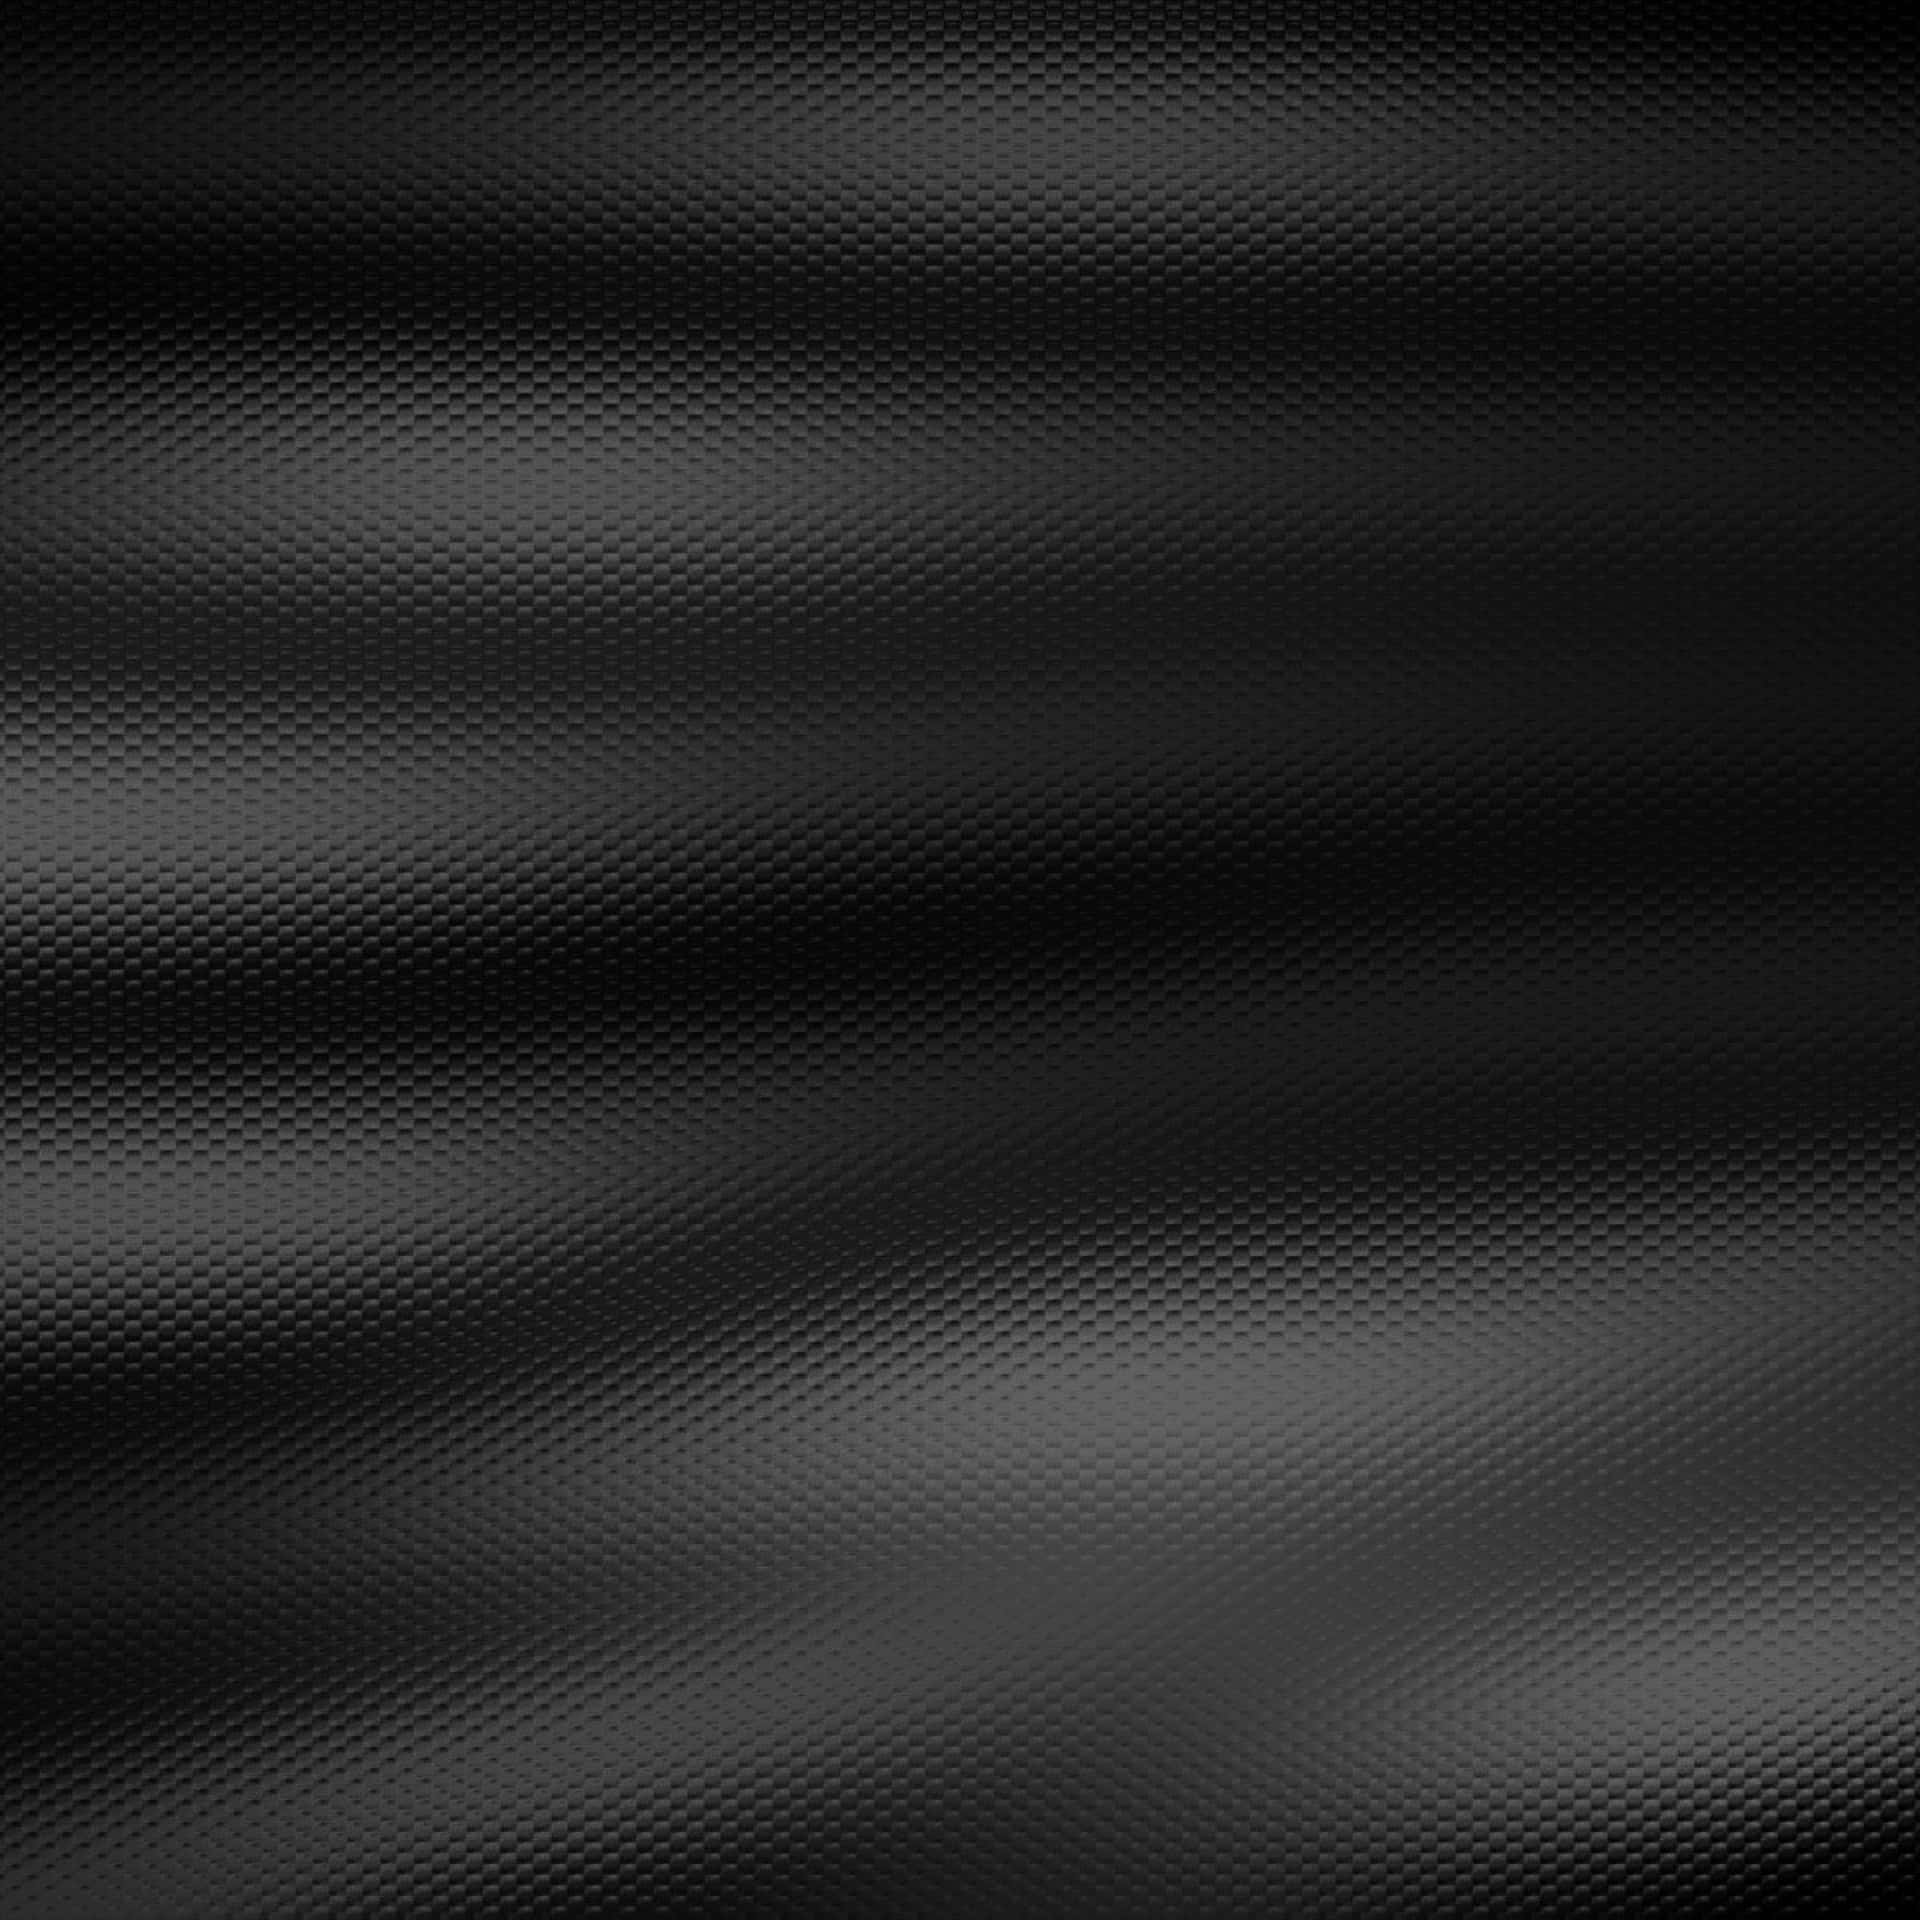 Ipad Escuro 2732 X 2732 Papel de Parede